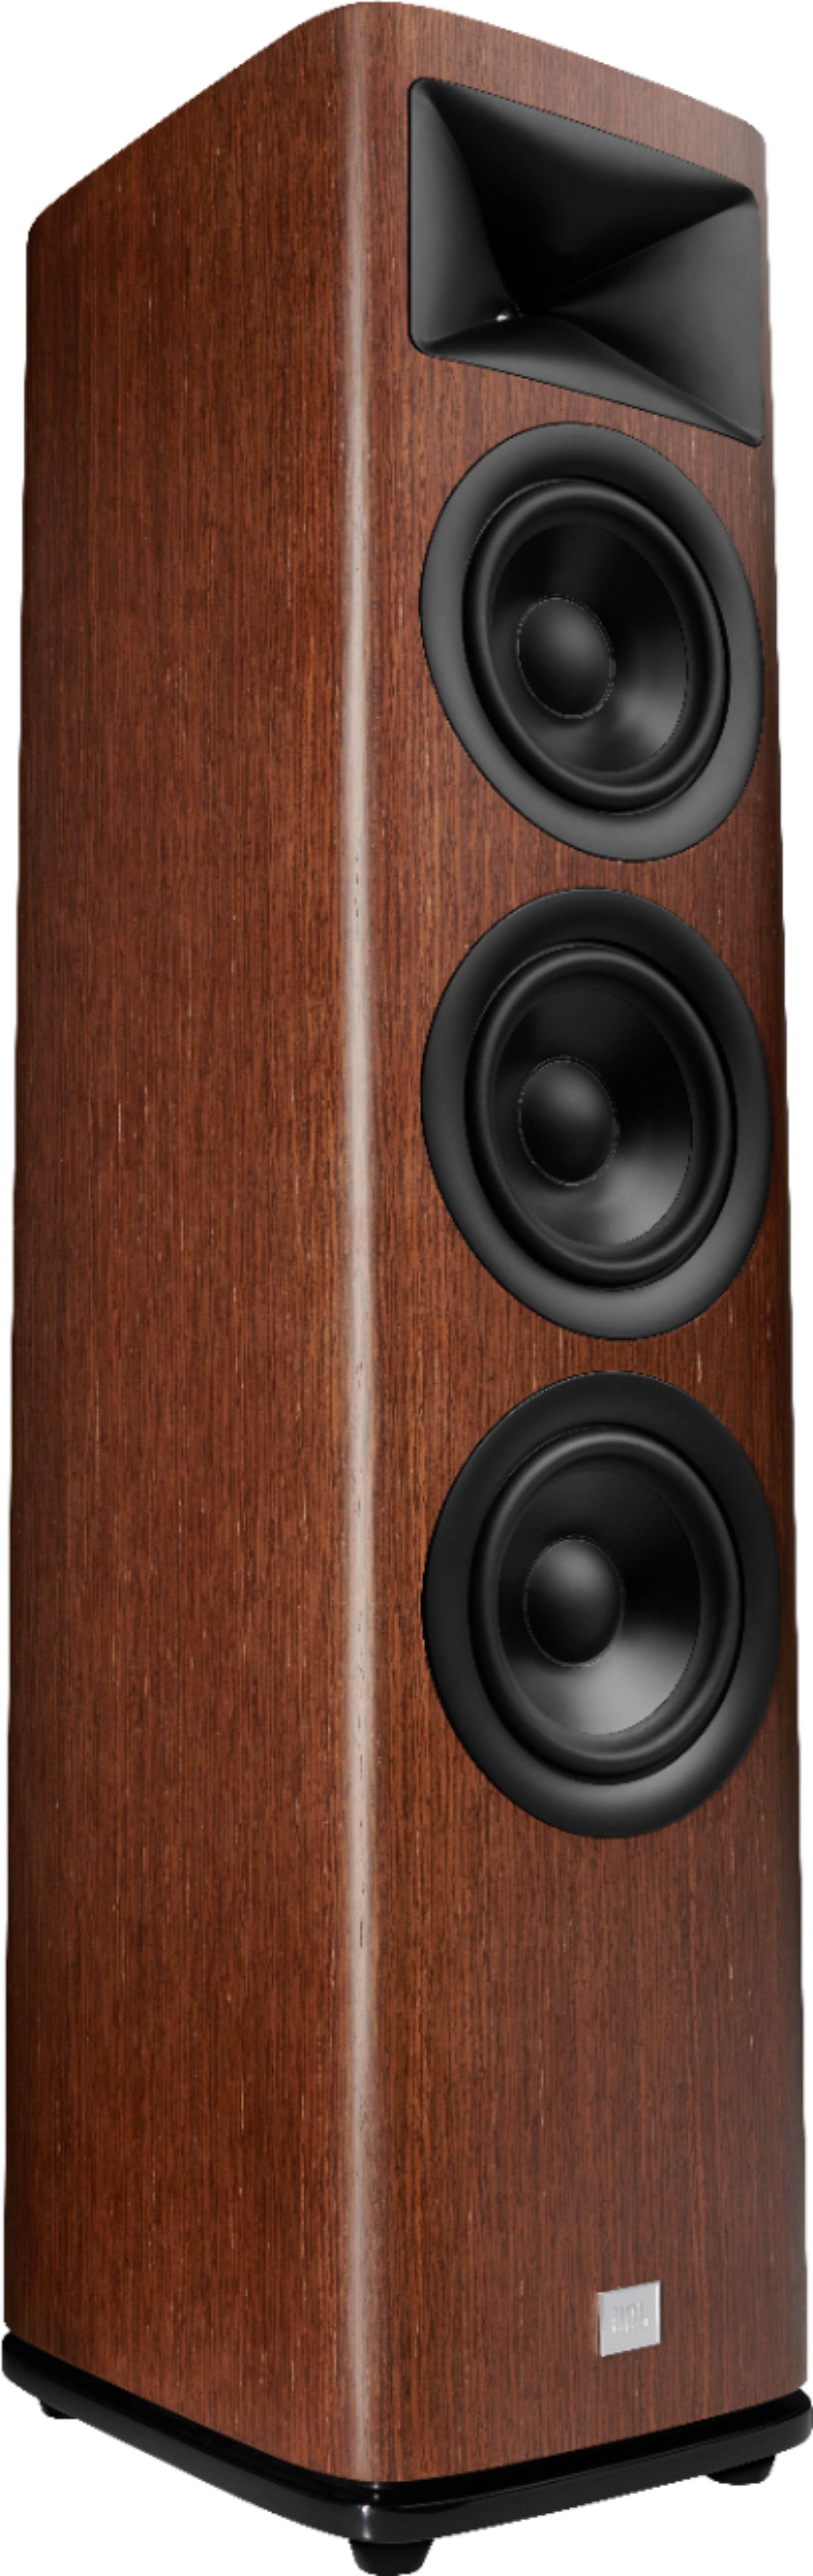 Angle View: JBL - HDI3600 Triple 6.5-inch 2-1/2 way Floorstanding Loudspeaker with 1" compression tweeter - Walnut Wood Finish